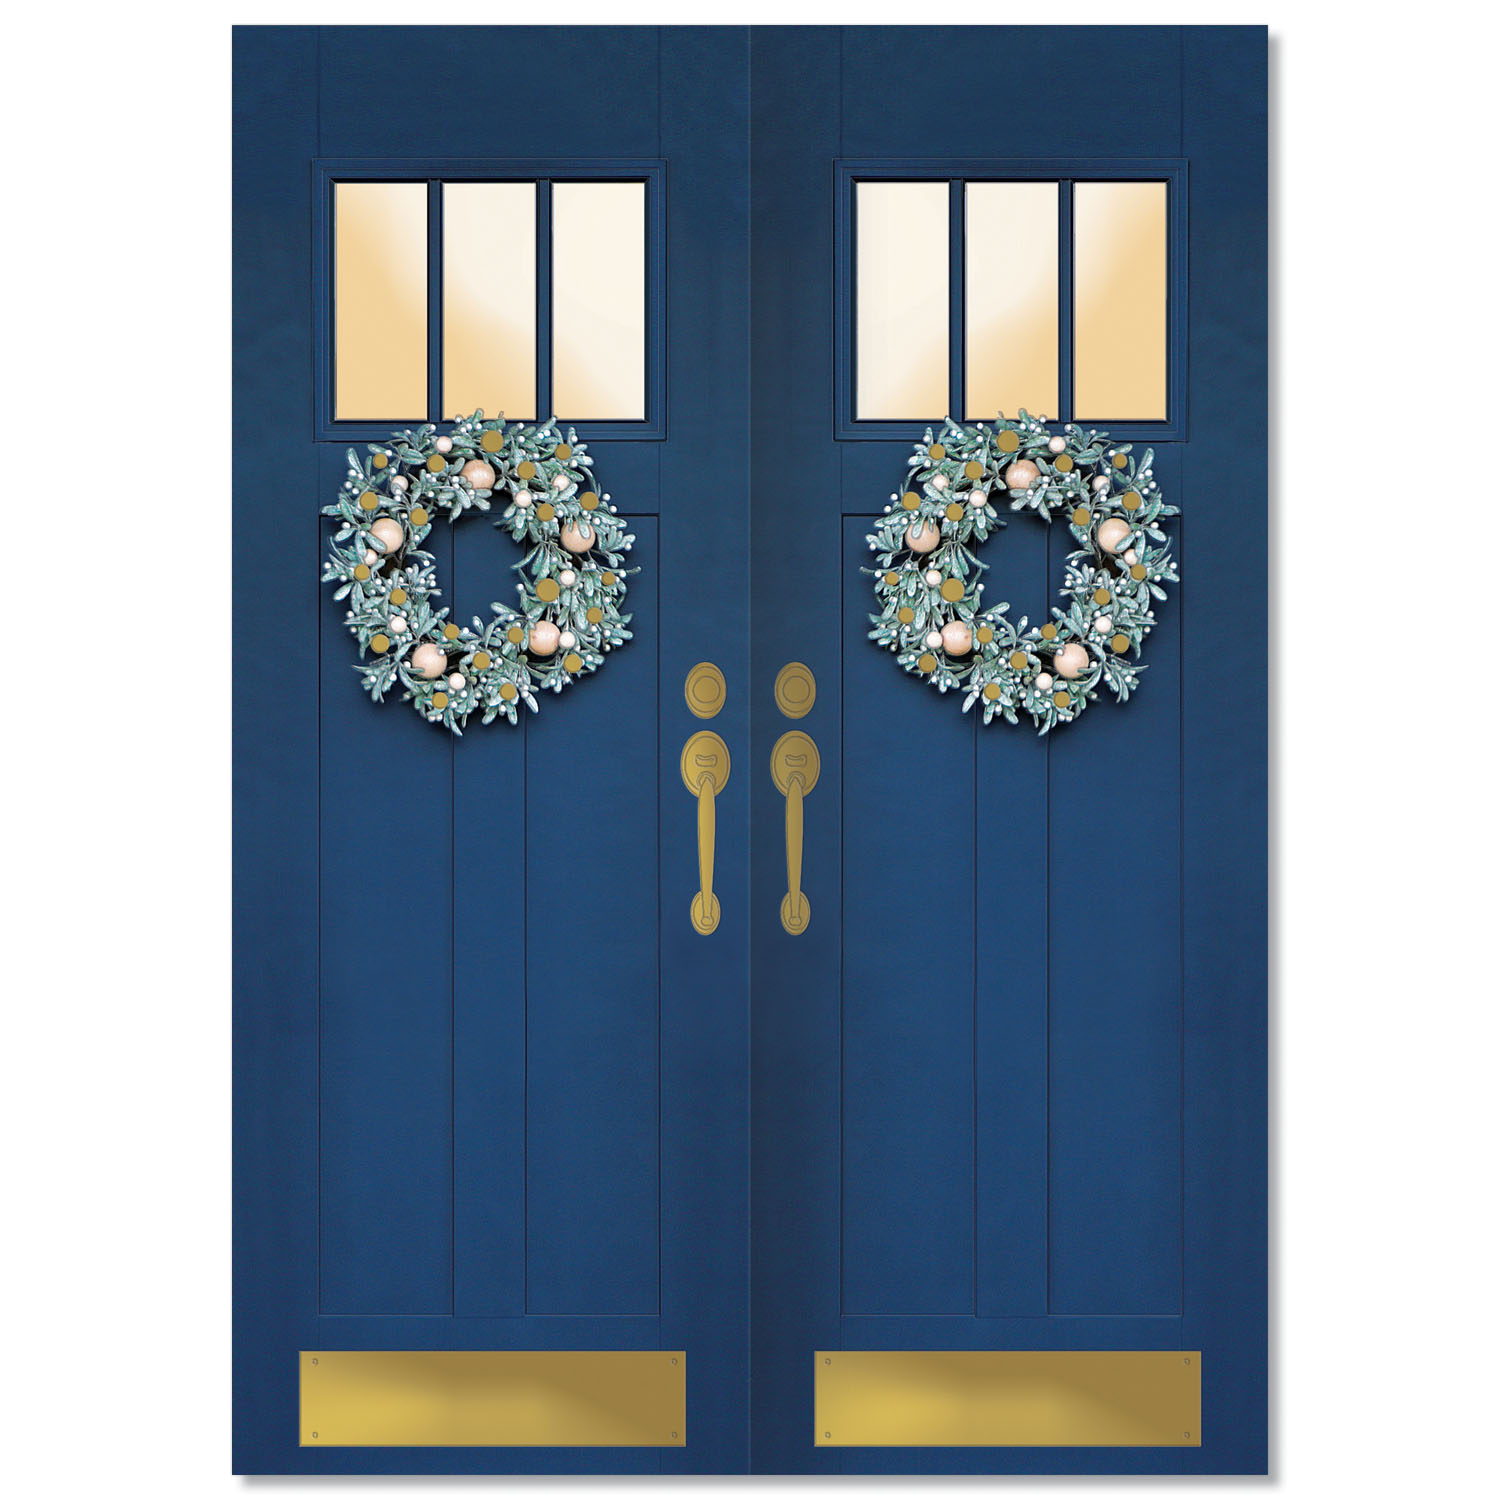 Blue Holiday Door Holiday Card